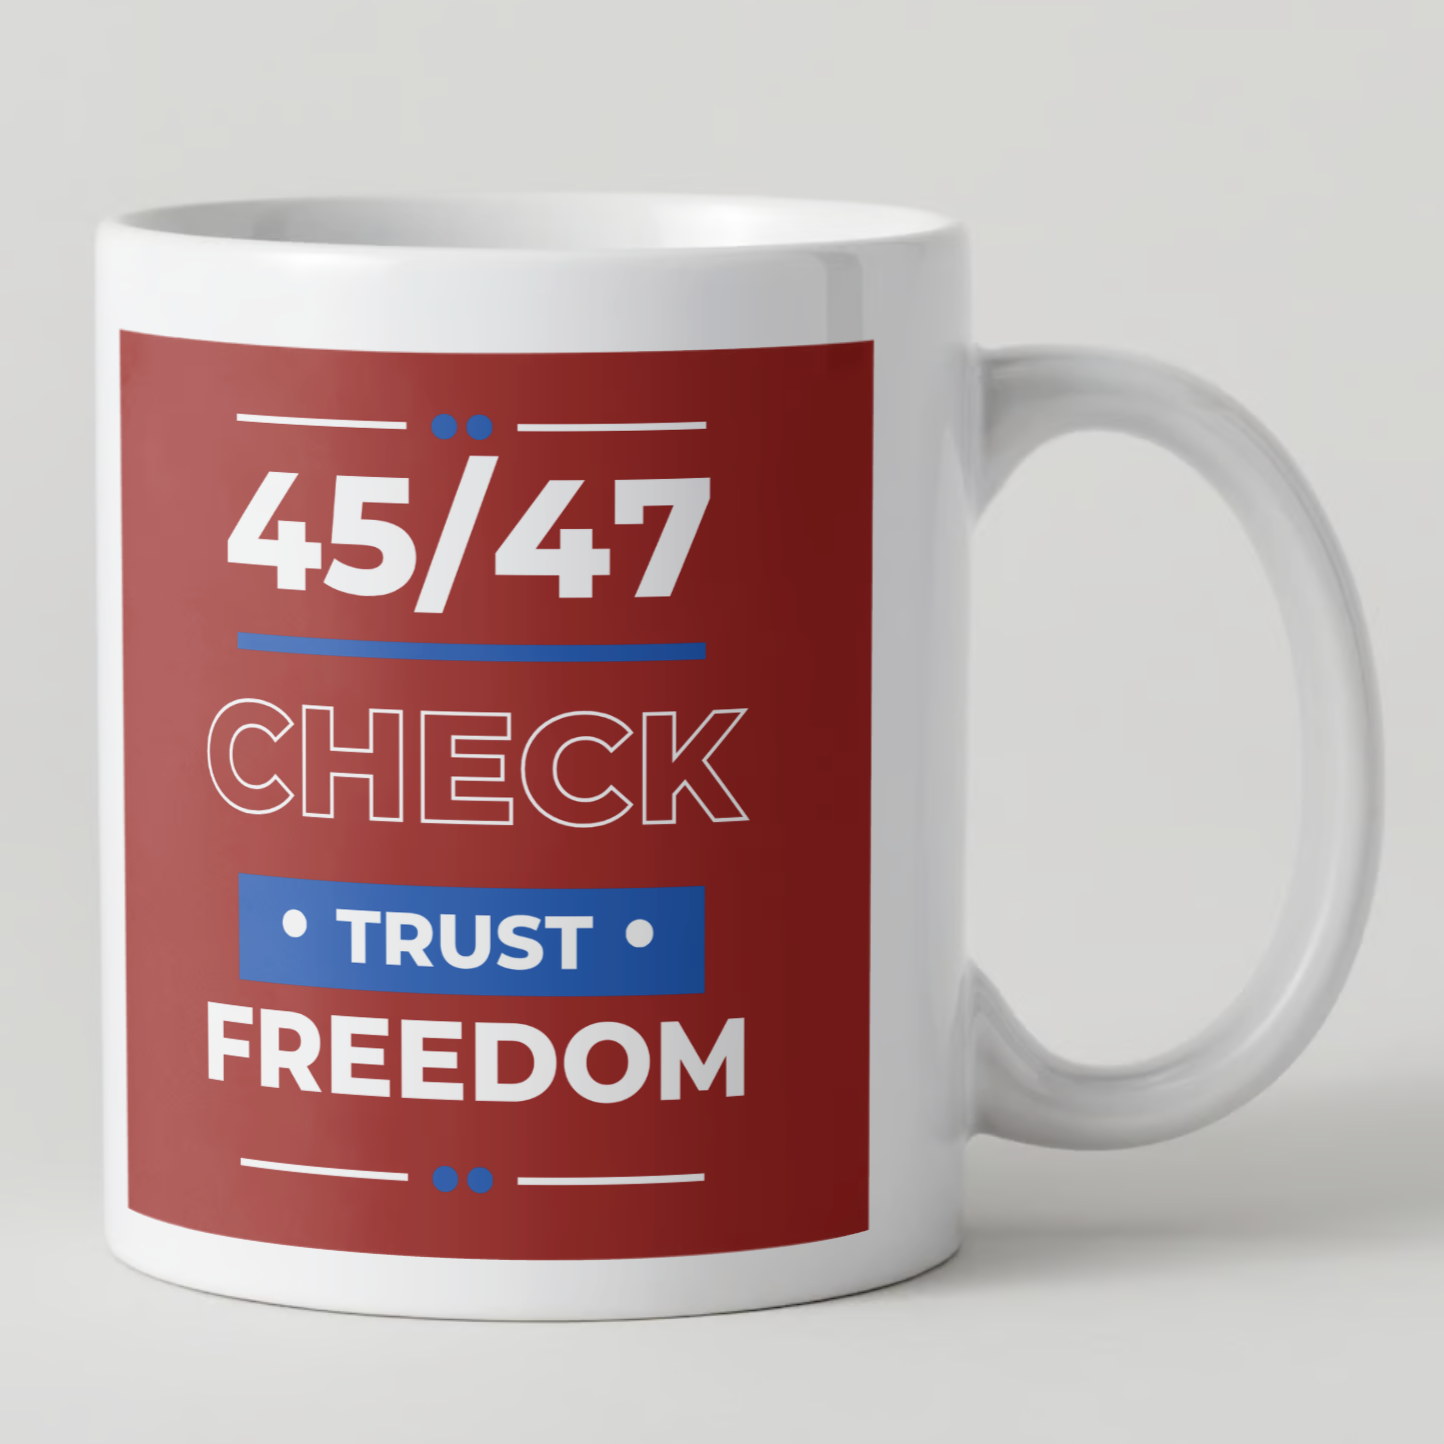 45/47 Trust Freedom Ceramic Mug